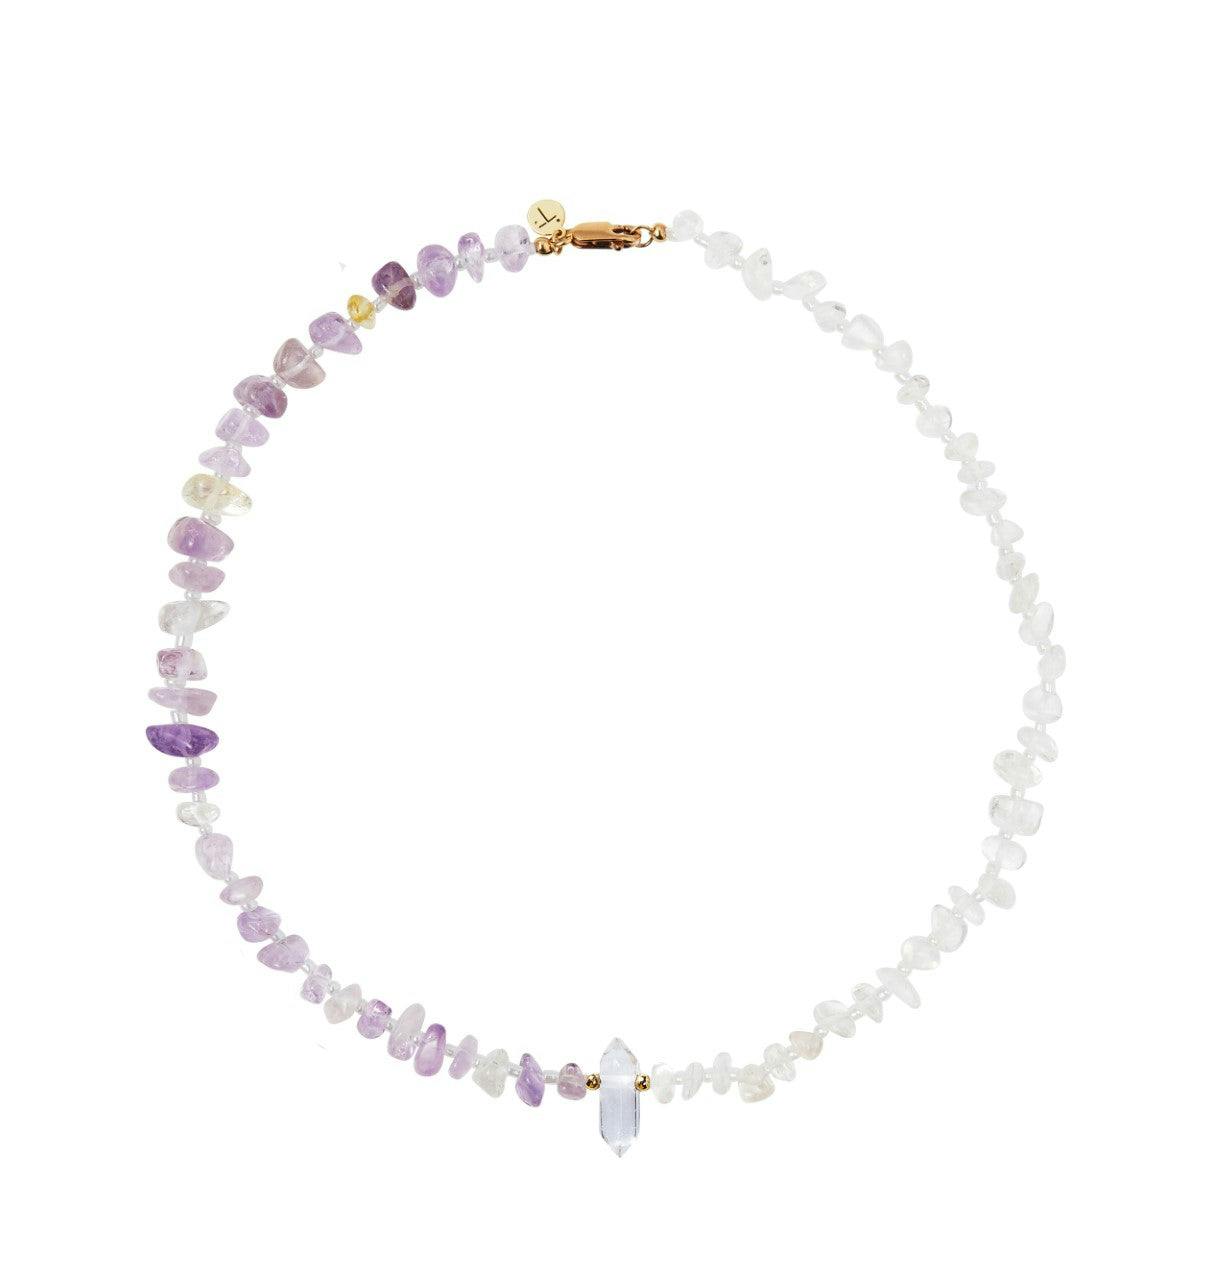 Clear quartz crystal necklace